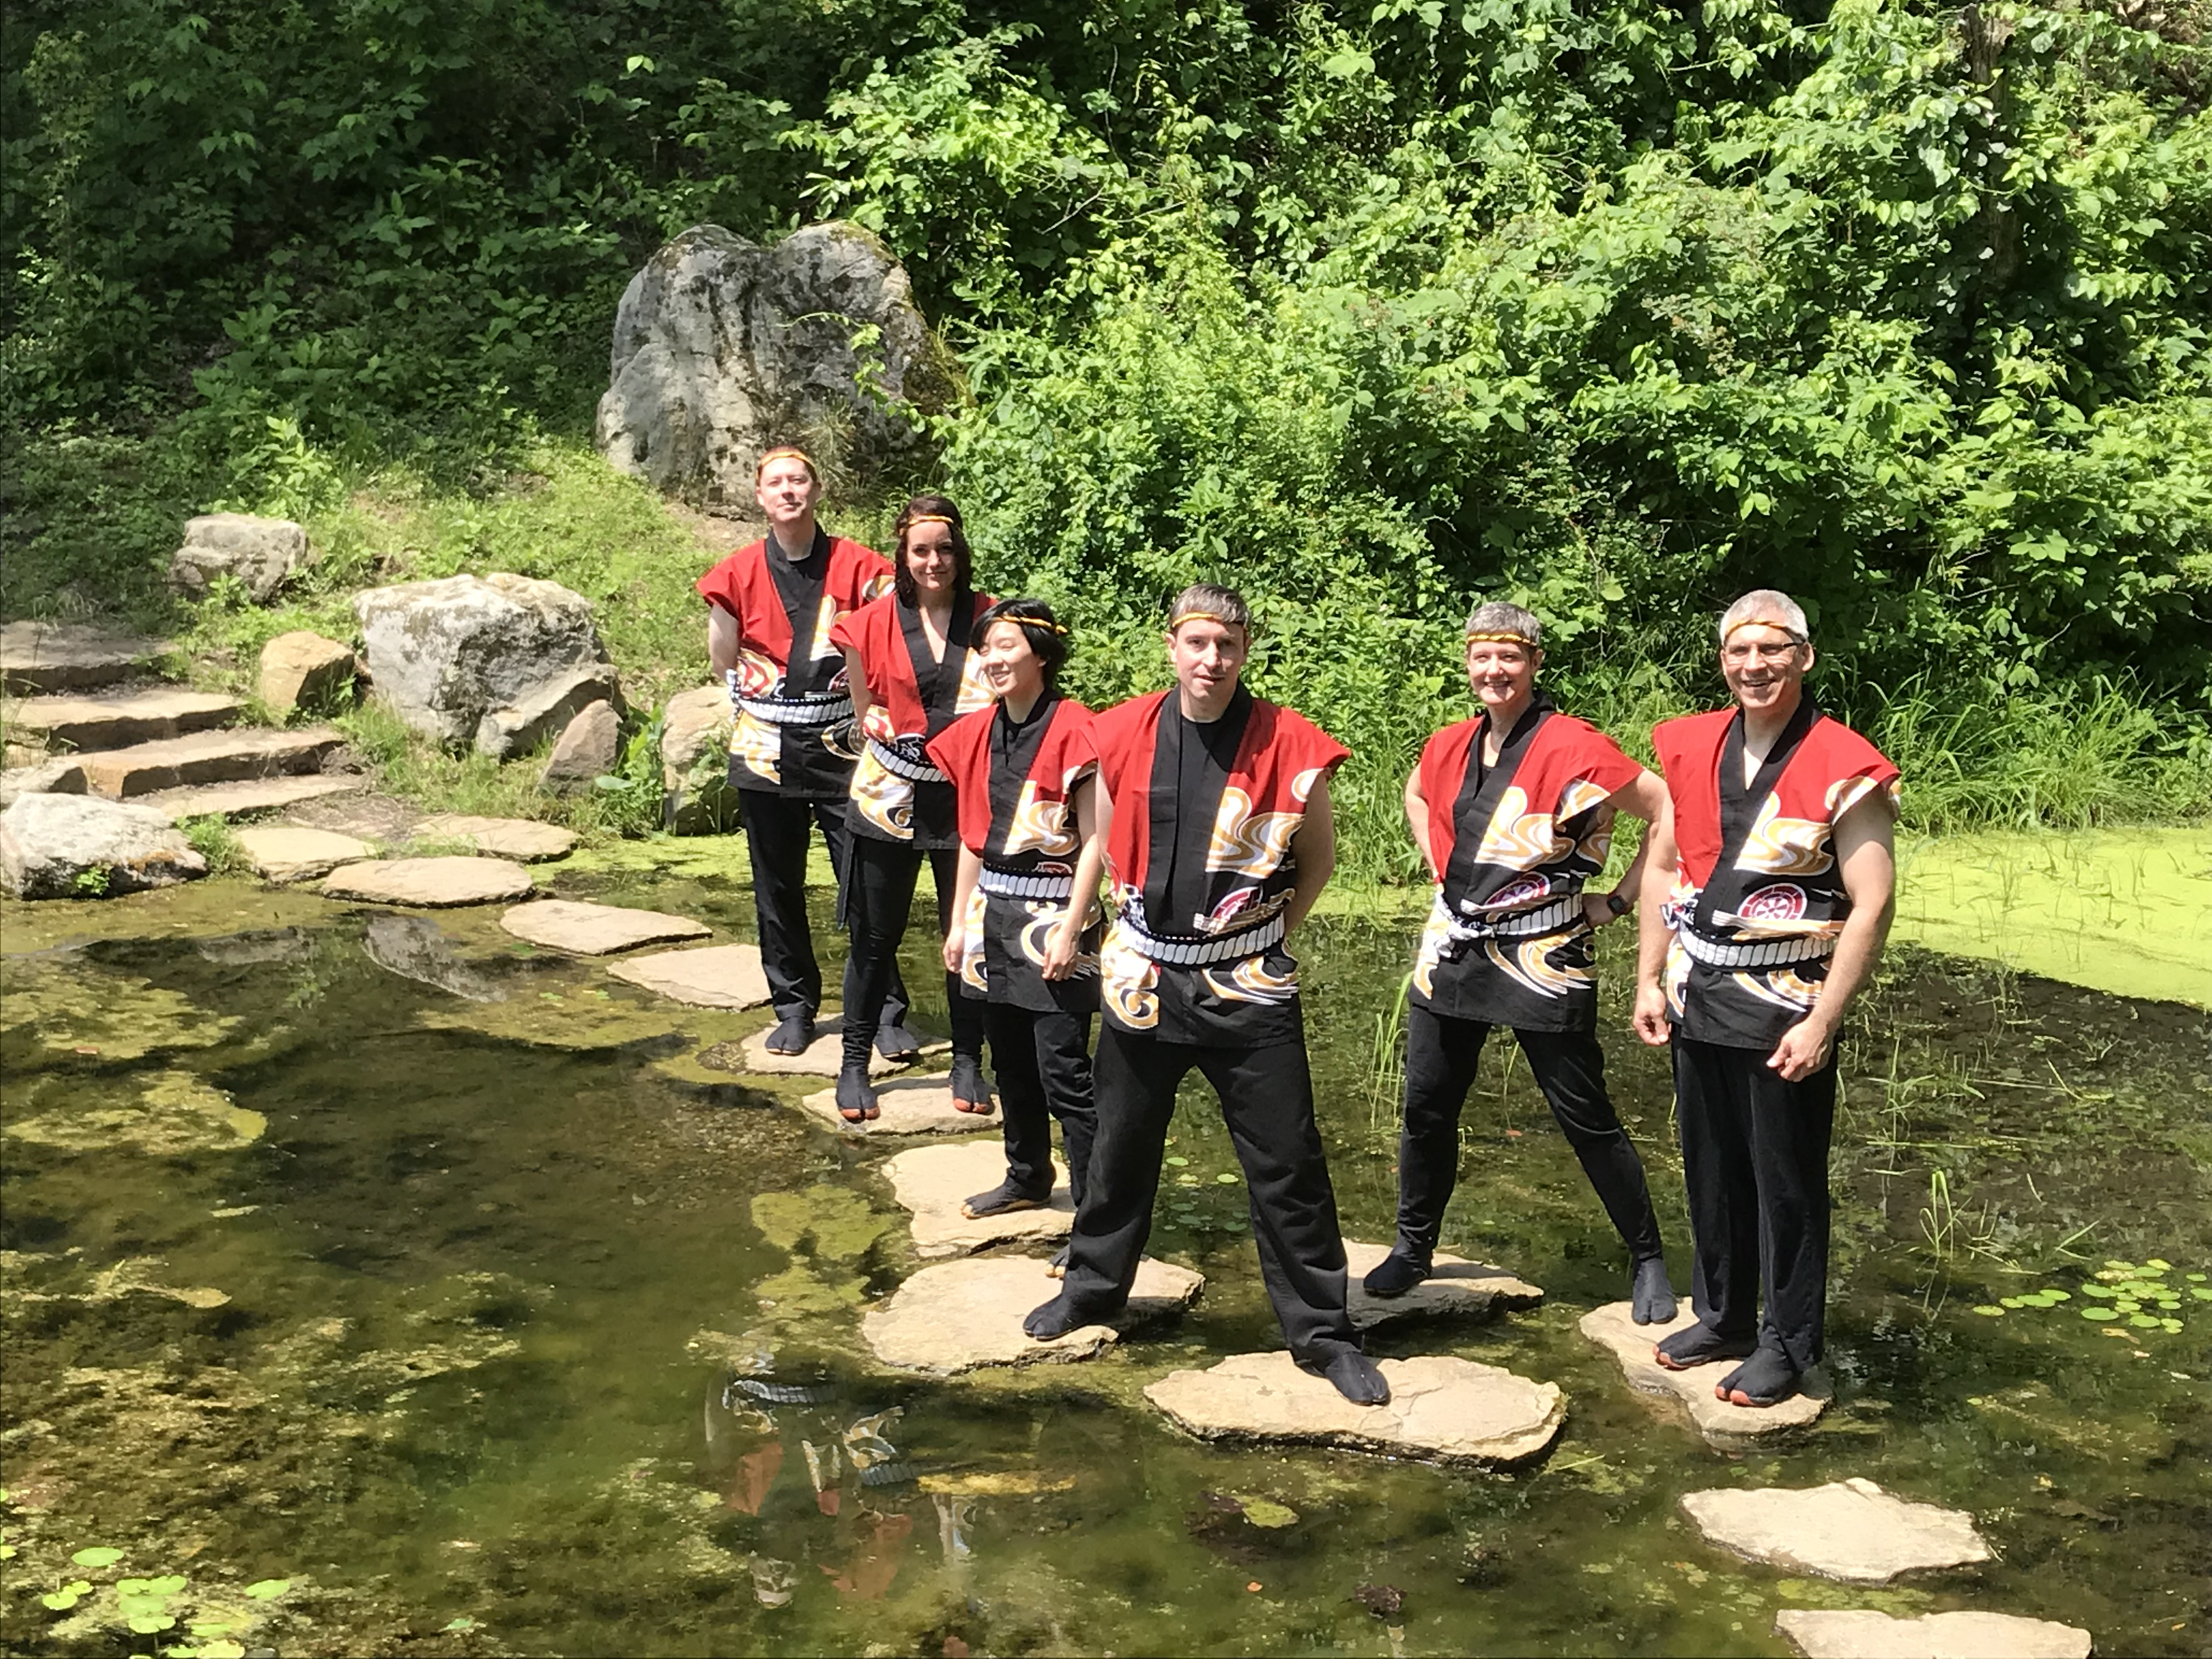 Pittsburgh Taiko players at the Pittsburgh Botanic Garden lotus pond in 2018